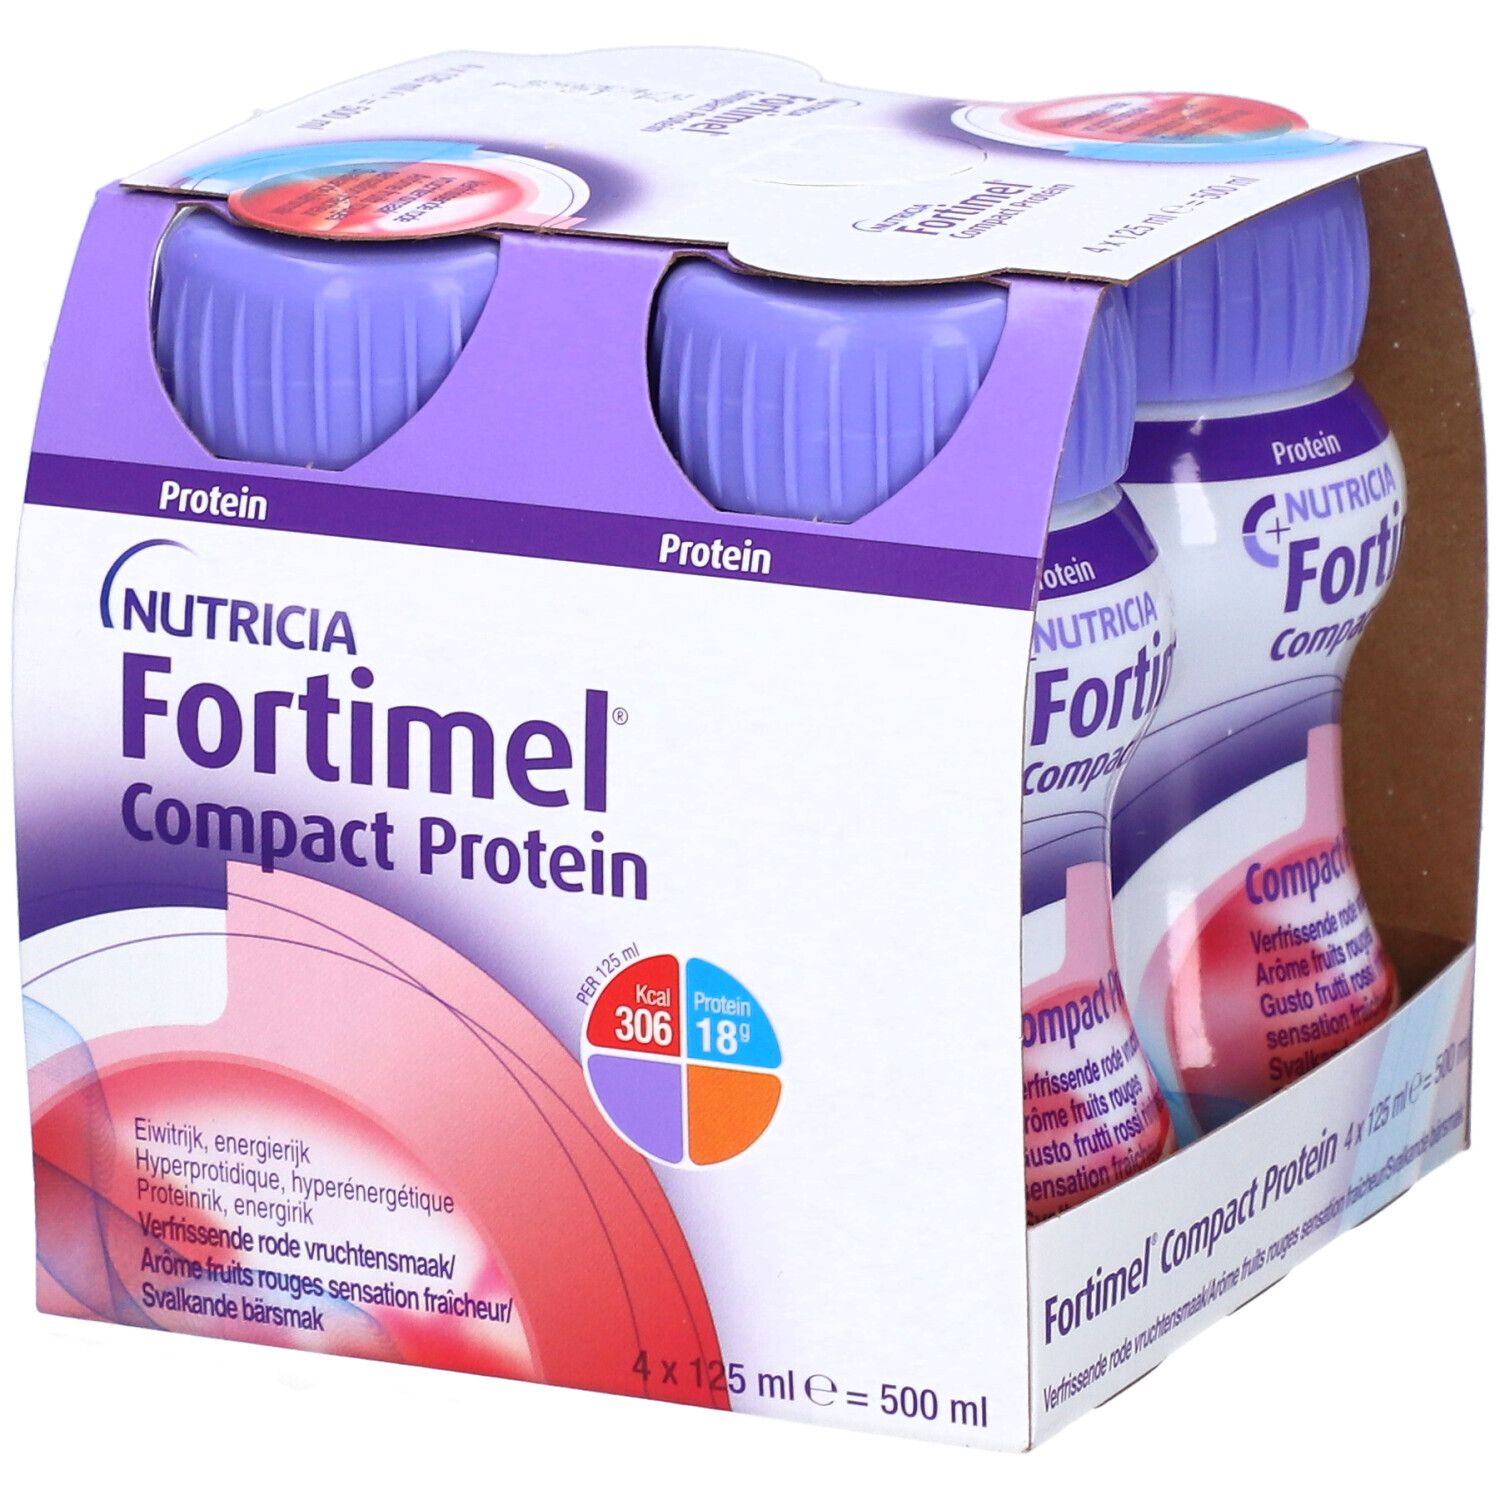 Fortimel Compact Protein Verfrissende Rode Vruchtensmaak